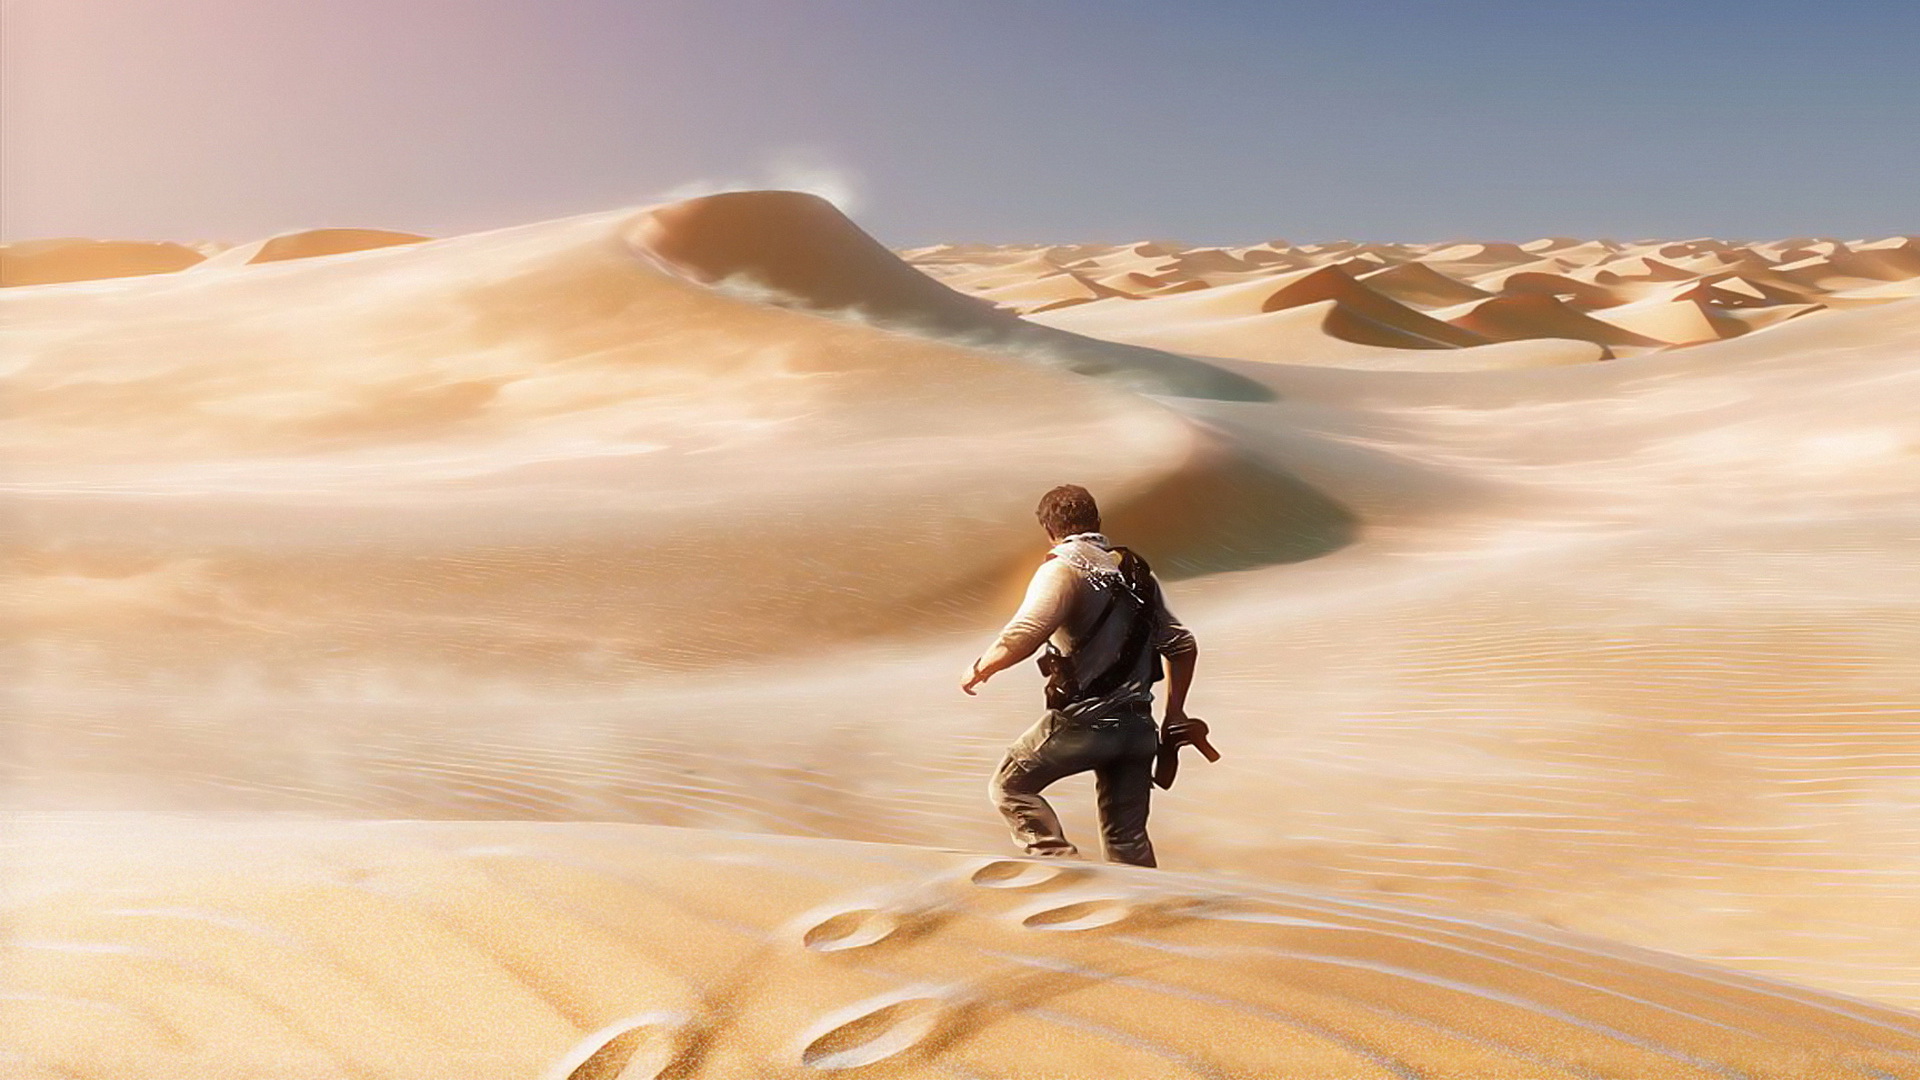 Uncharted Desert Wallpaper Playstation HD 1080p